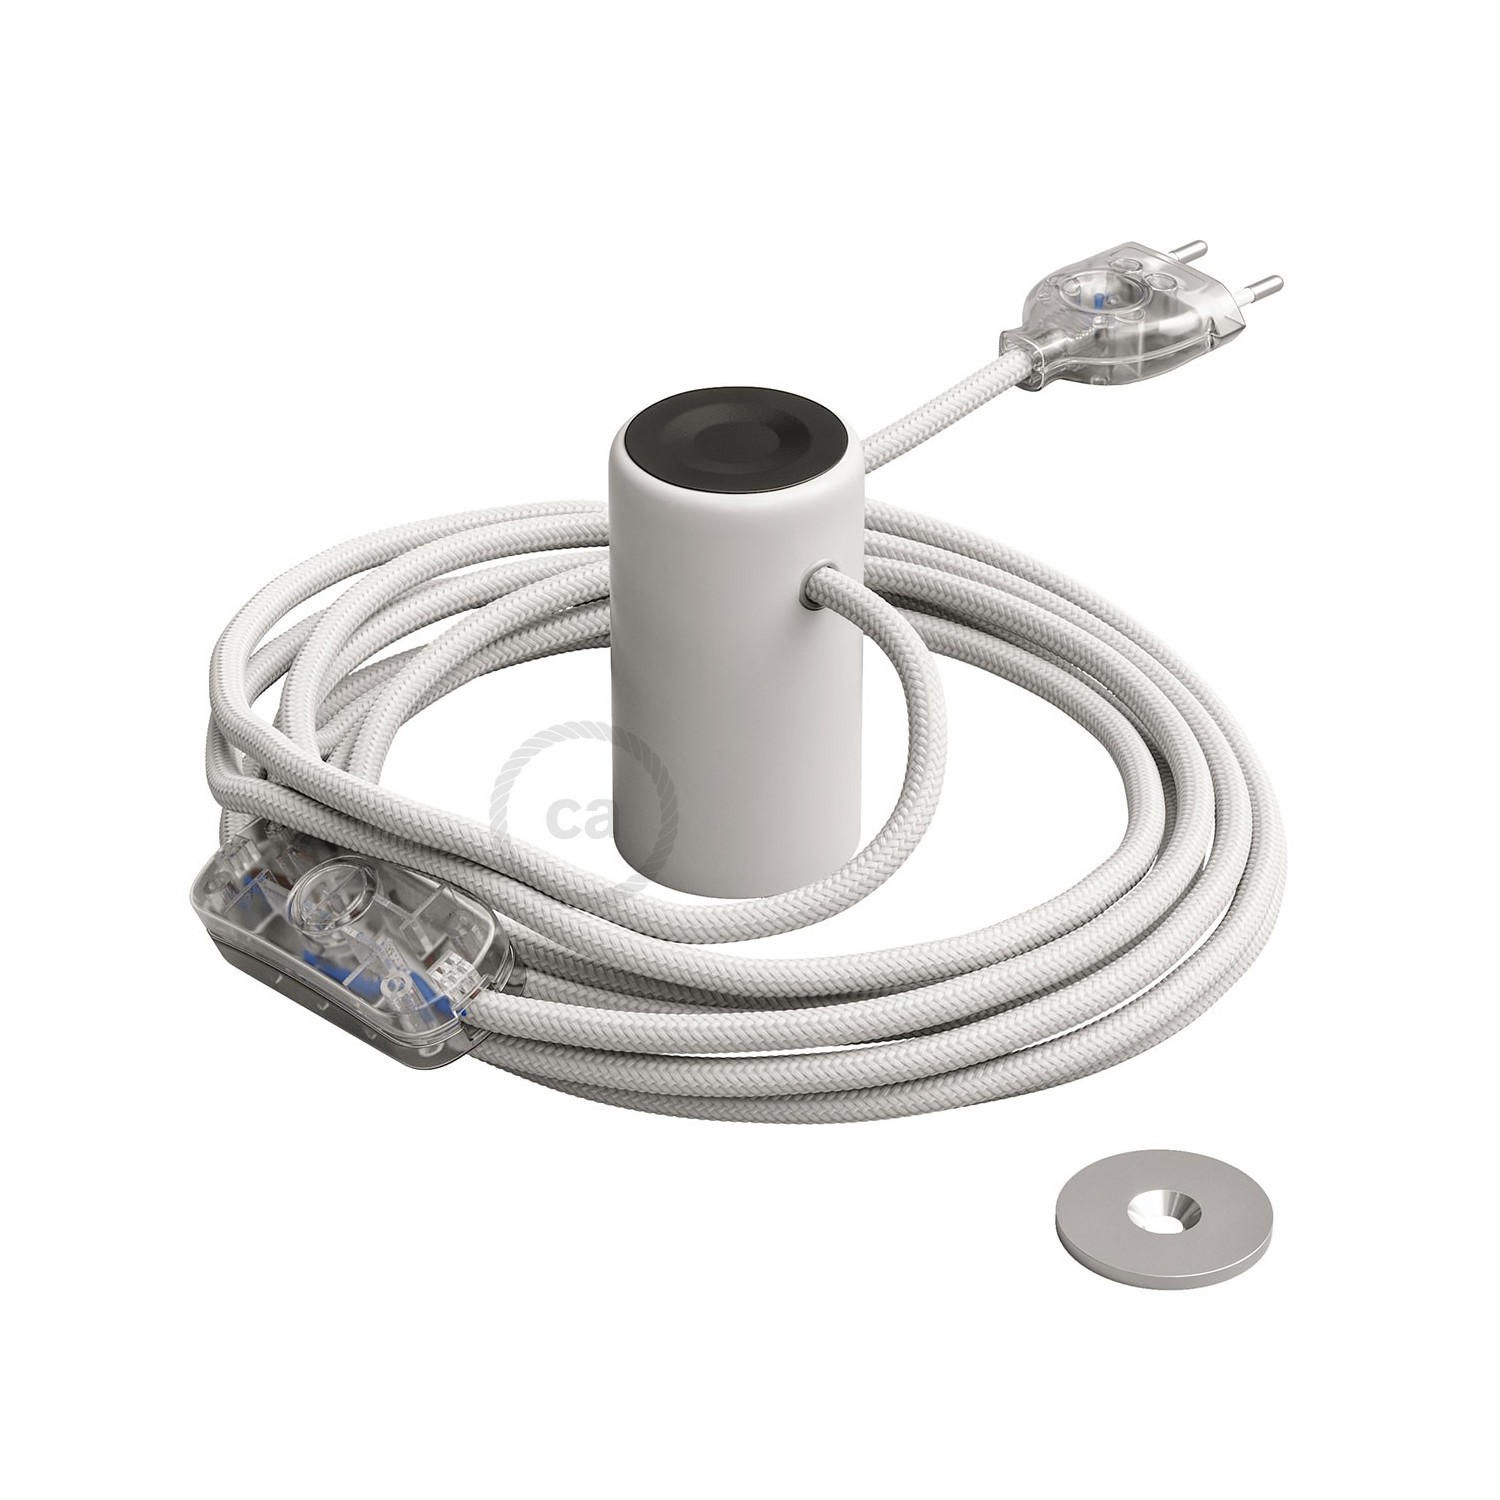 Magnetico®-Plug Blanco, socket magnético listo para usar